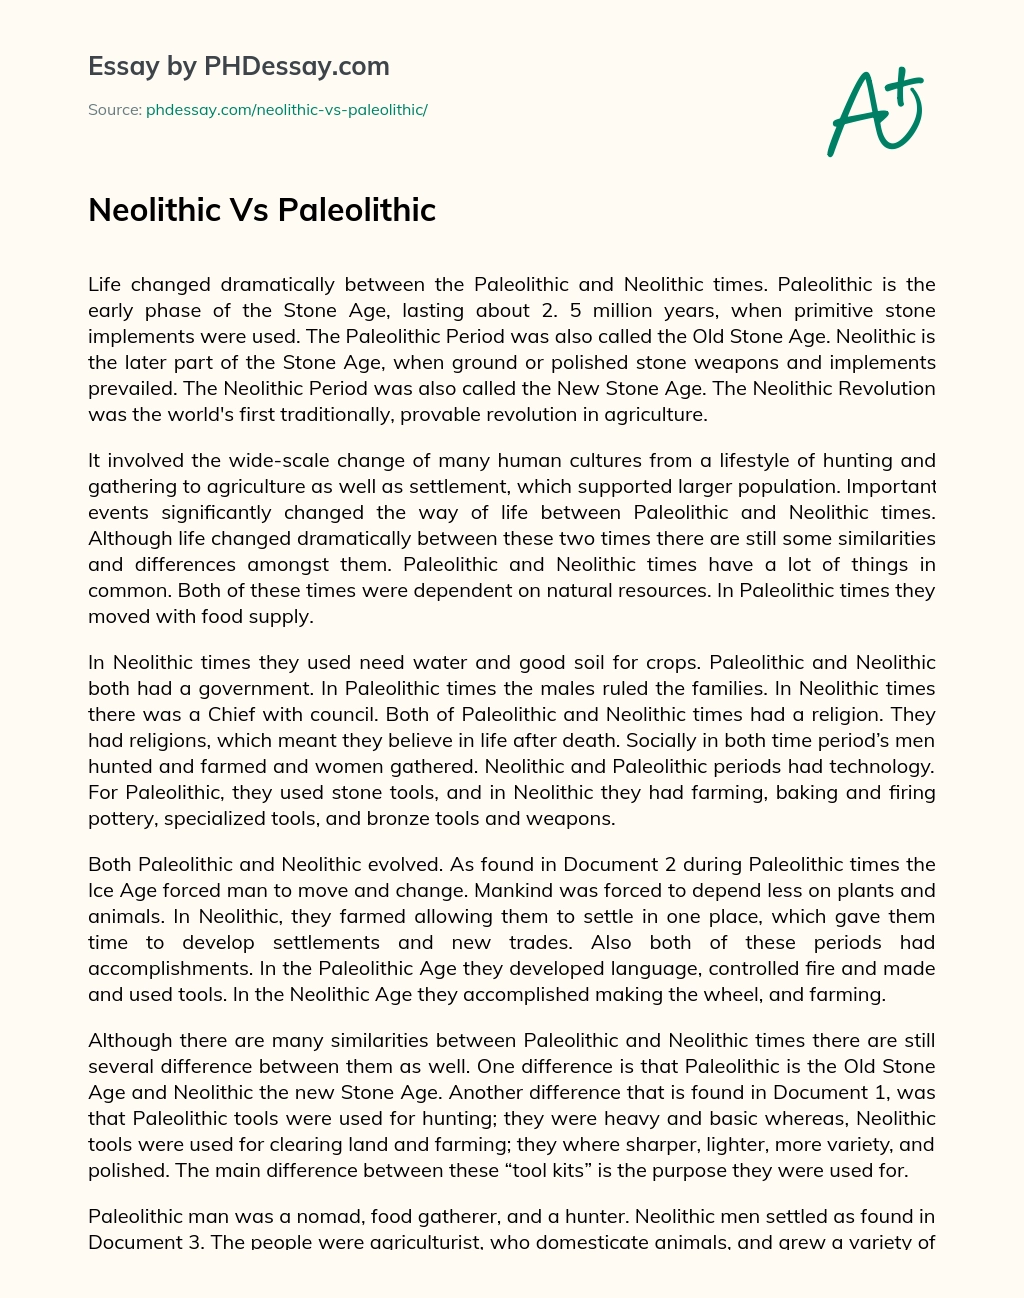 Neolithic Vs Paleolithic essay